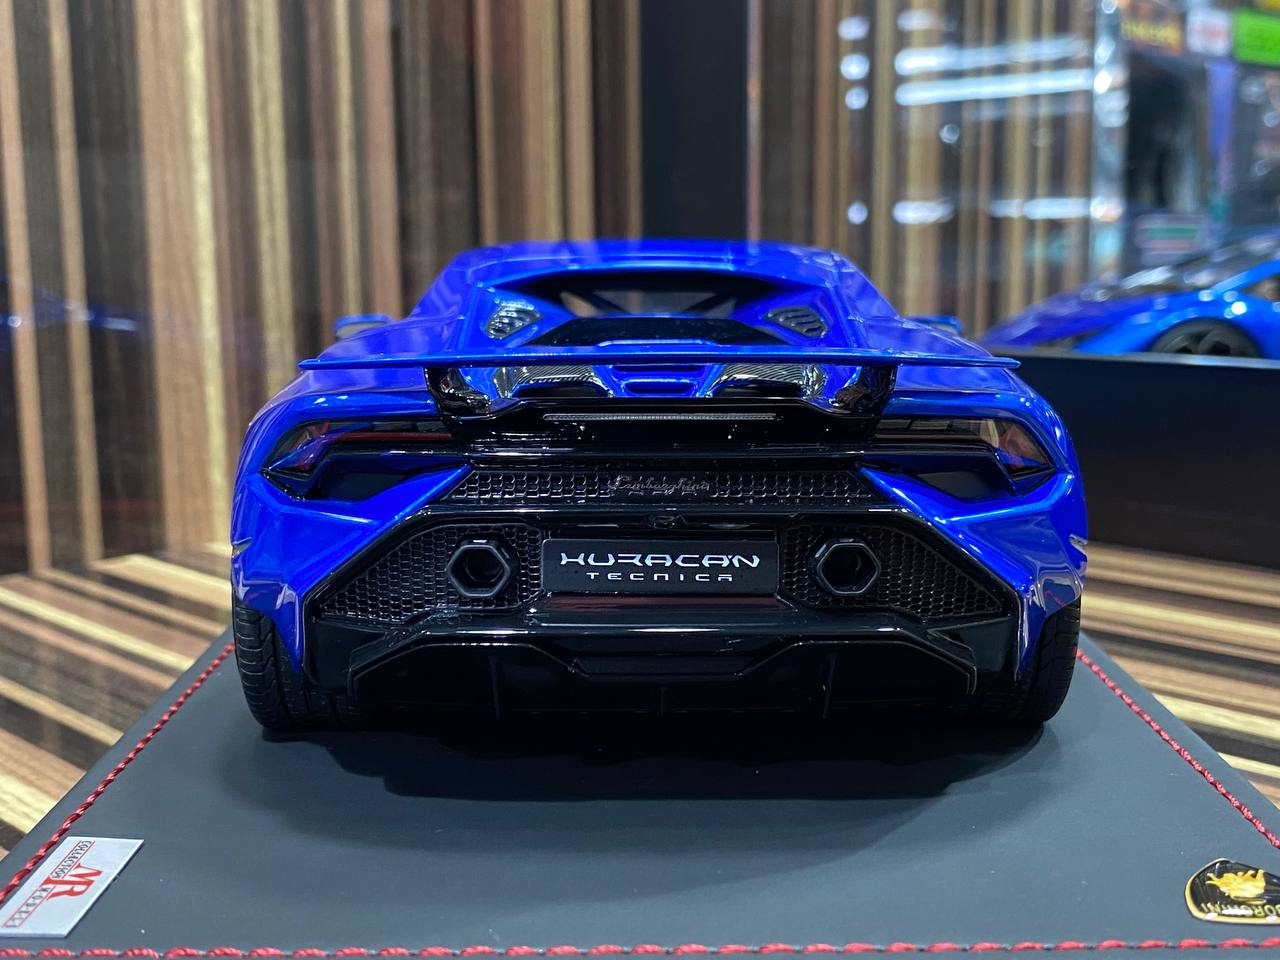 1/18 Resin Lamborghini Huracan Tecnica Blue by MR Collection|Sold in Dturman.com Dubai UAE.